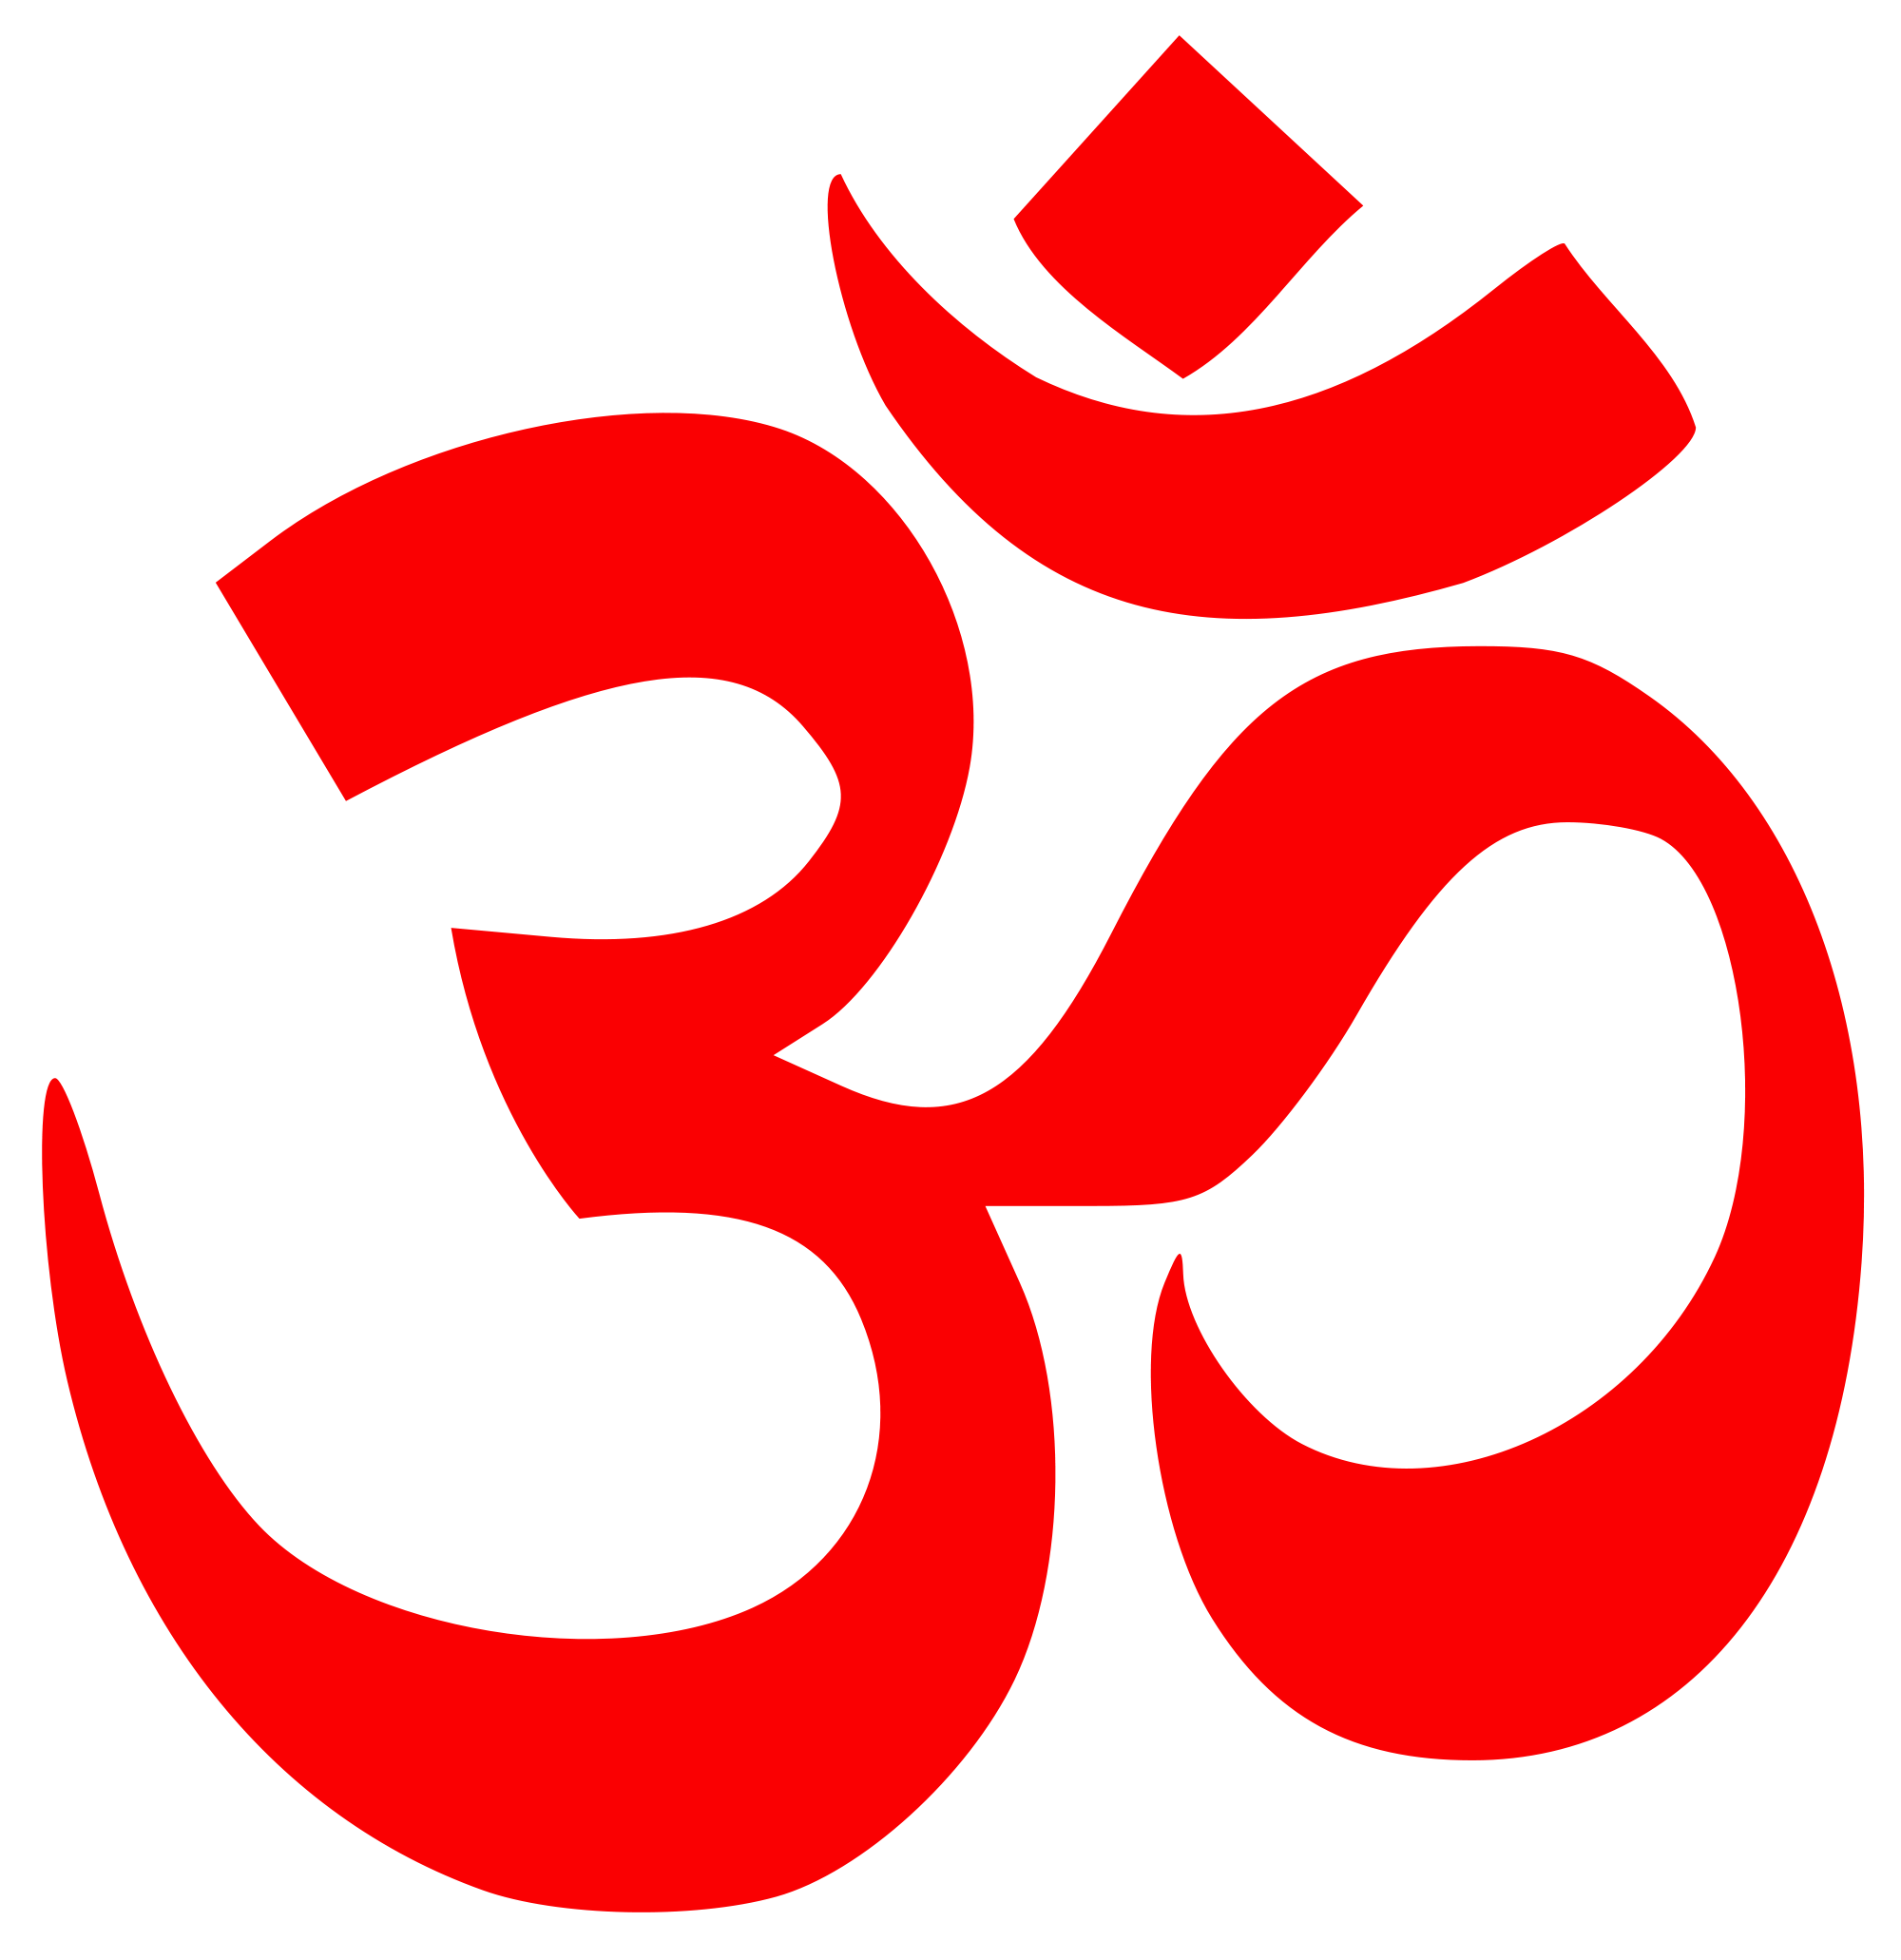 Hindu Symbols - The 3 Universal Symbols of Hinduism